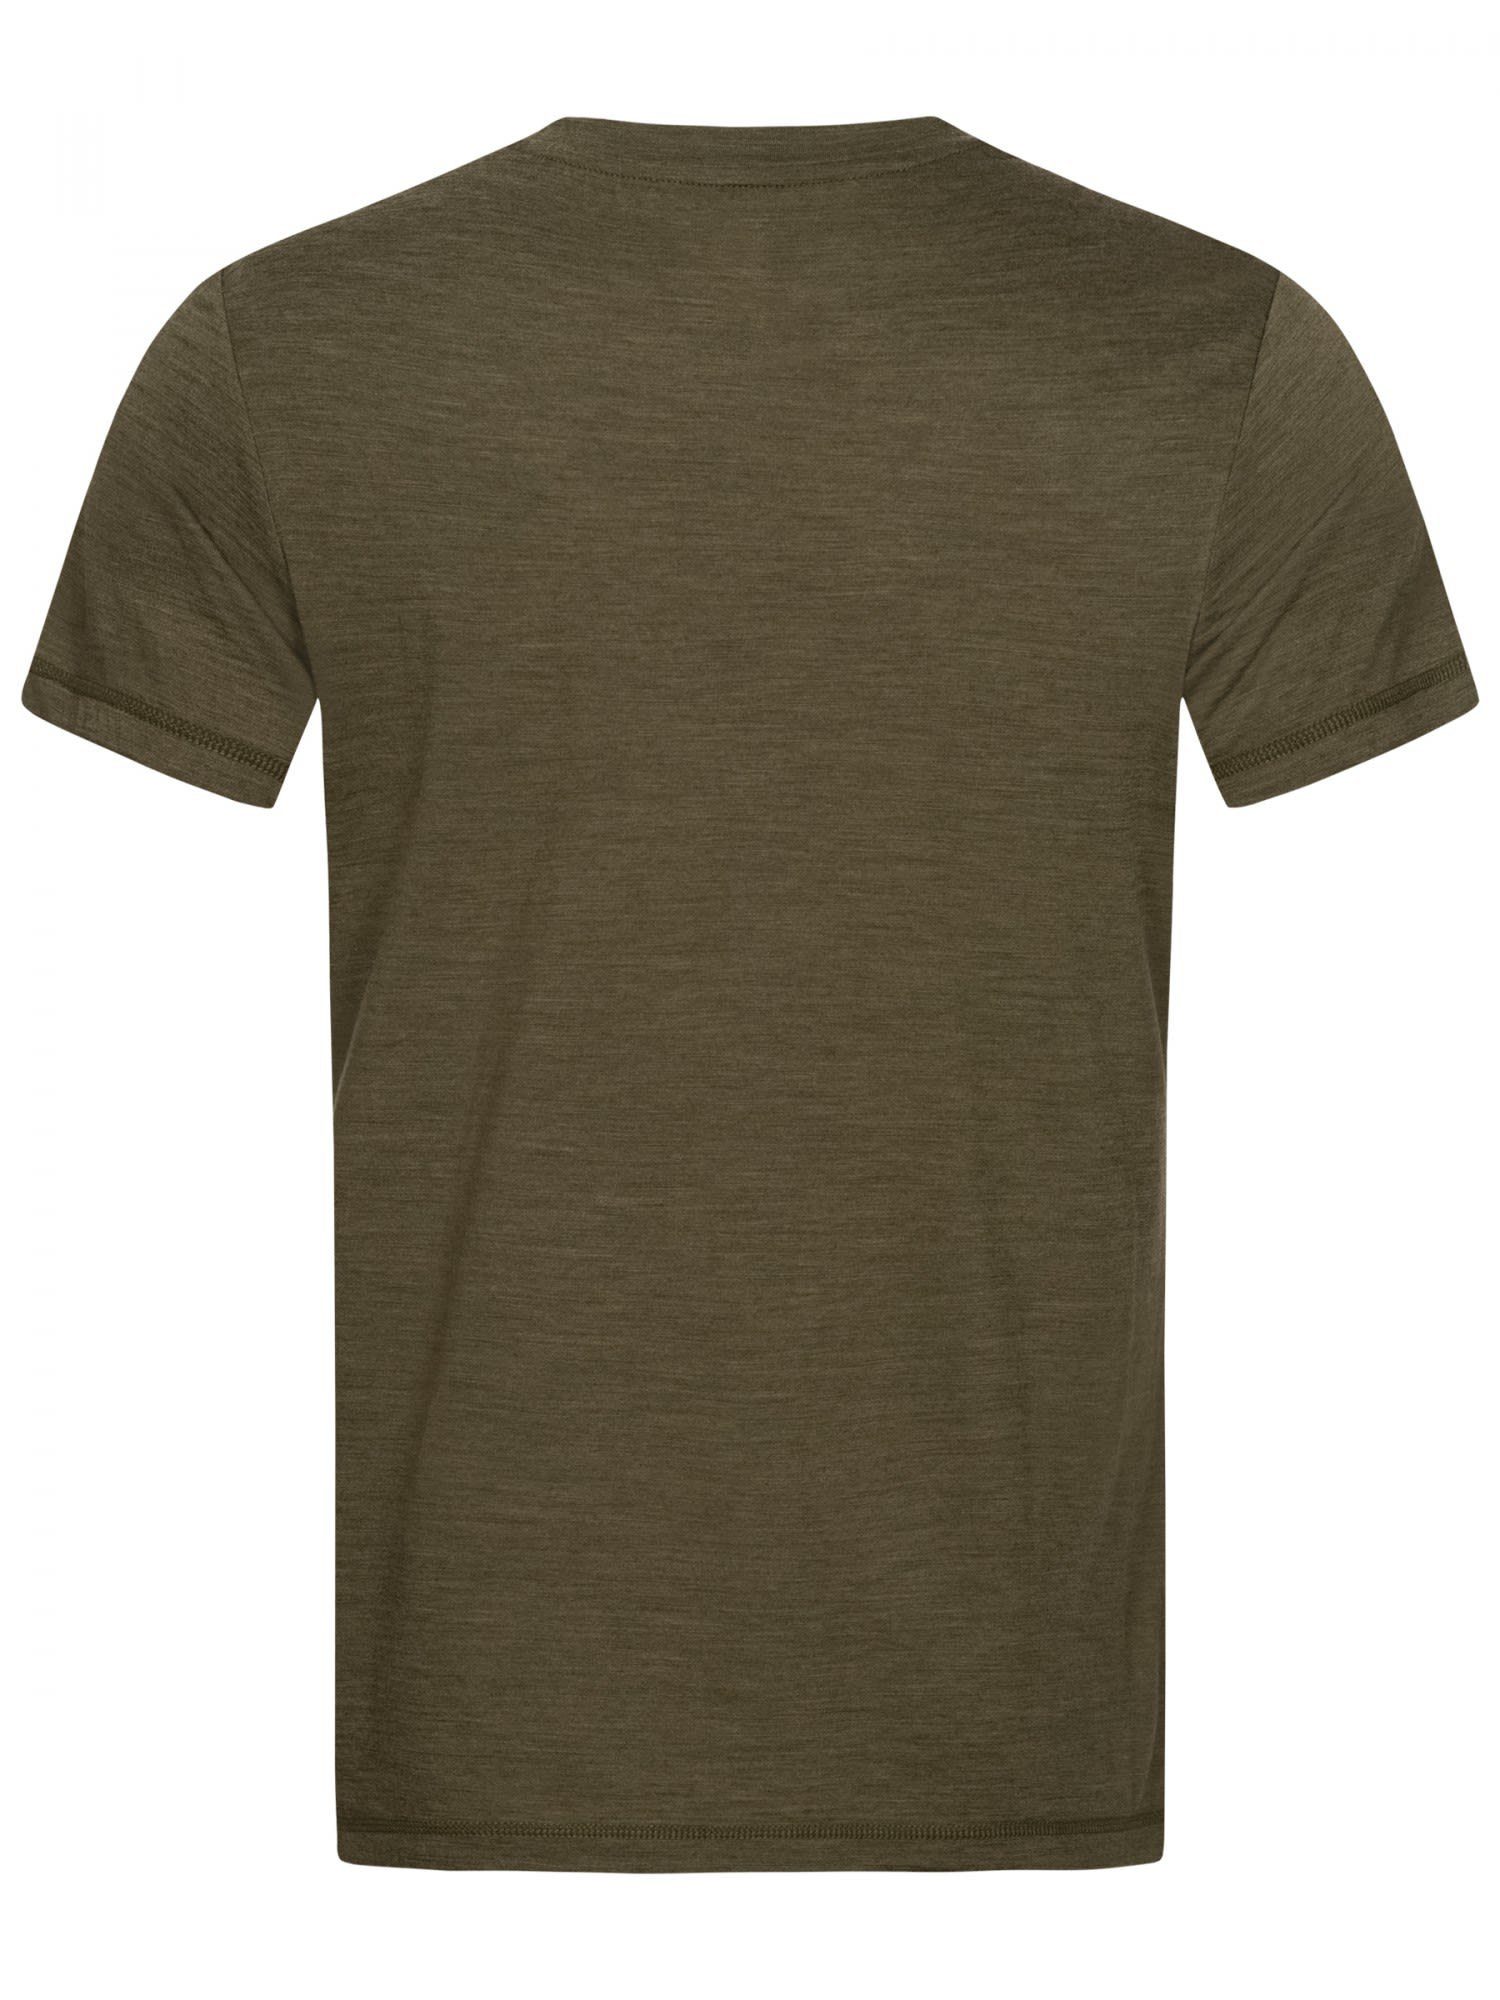 SUPER.NATURAL T-Shirt Grey Tee - Melange Herren Kurzarm-Shirt Black Green M Super.natural Logo Grey